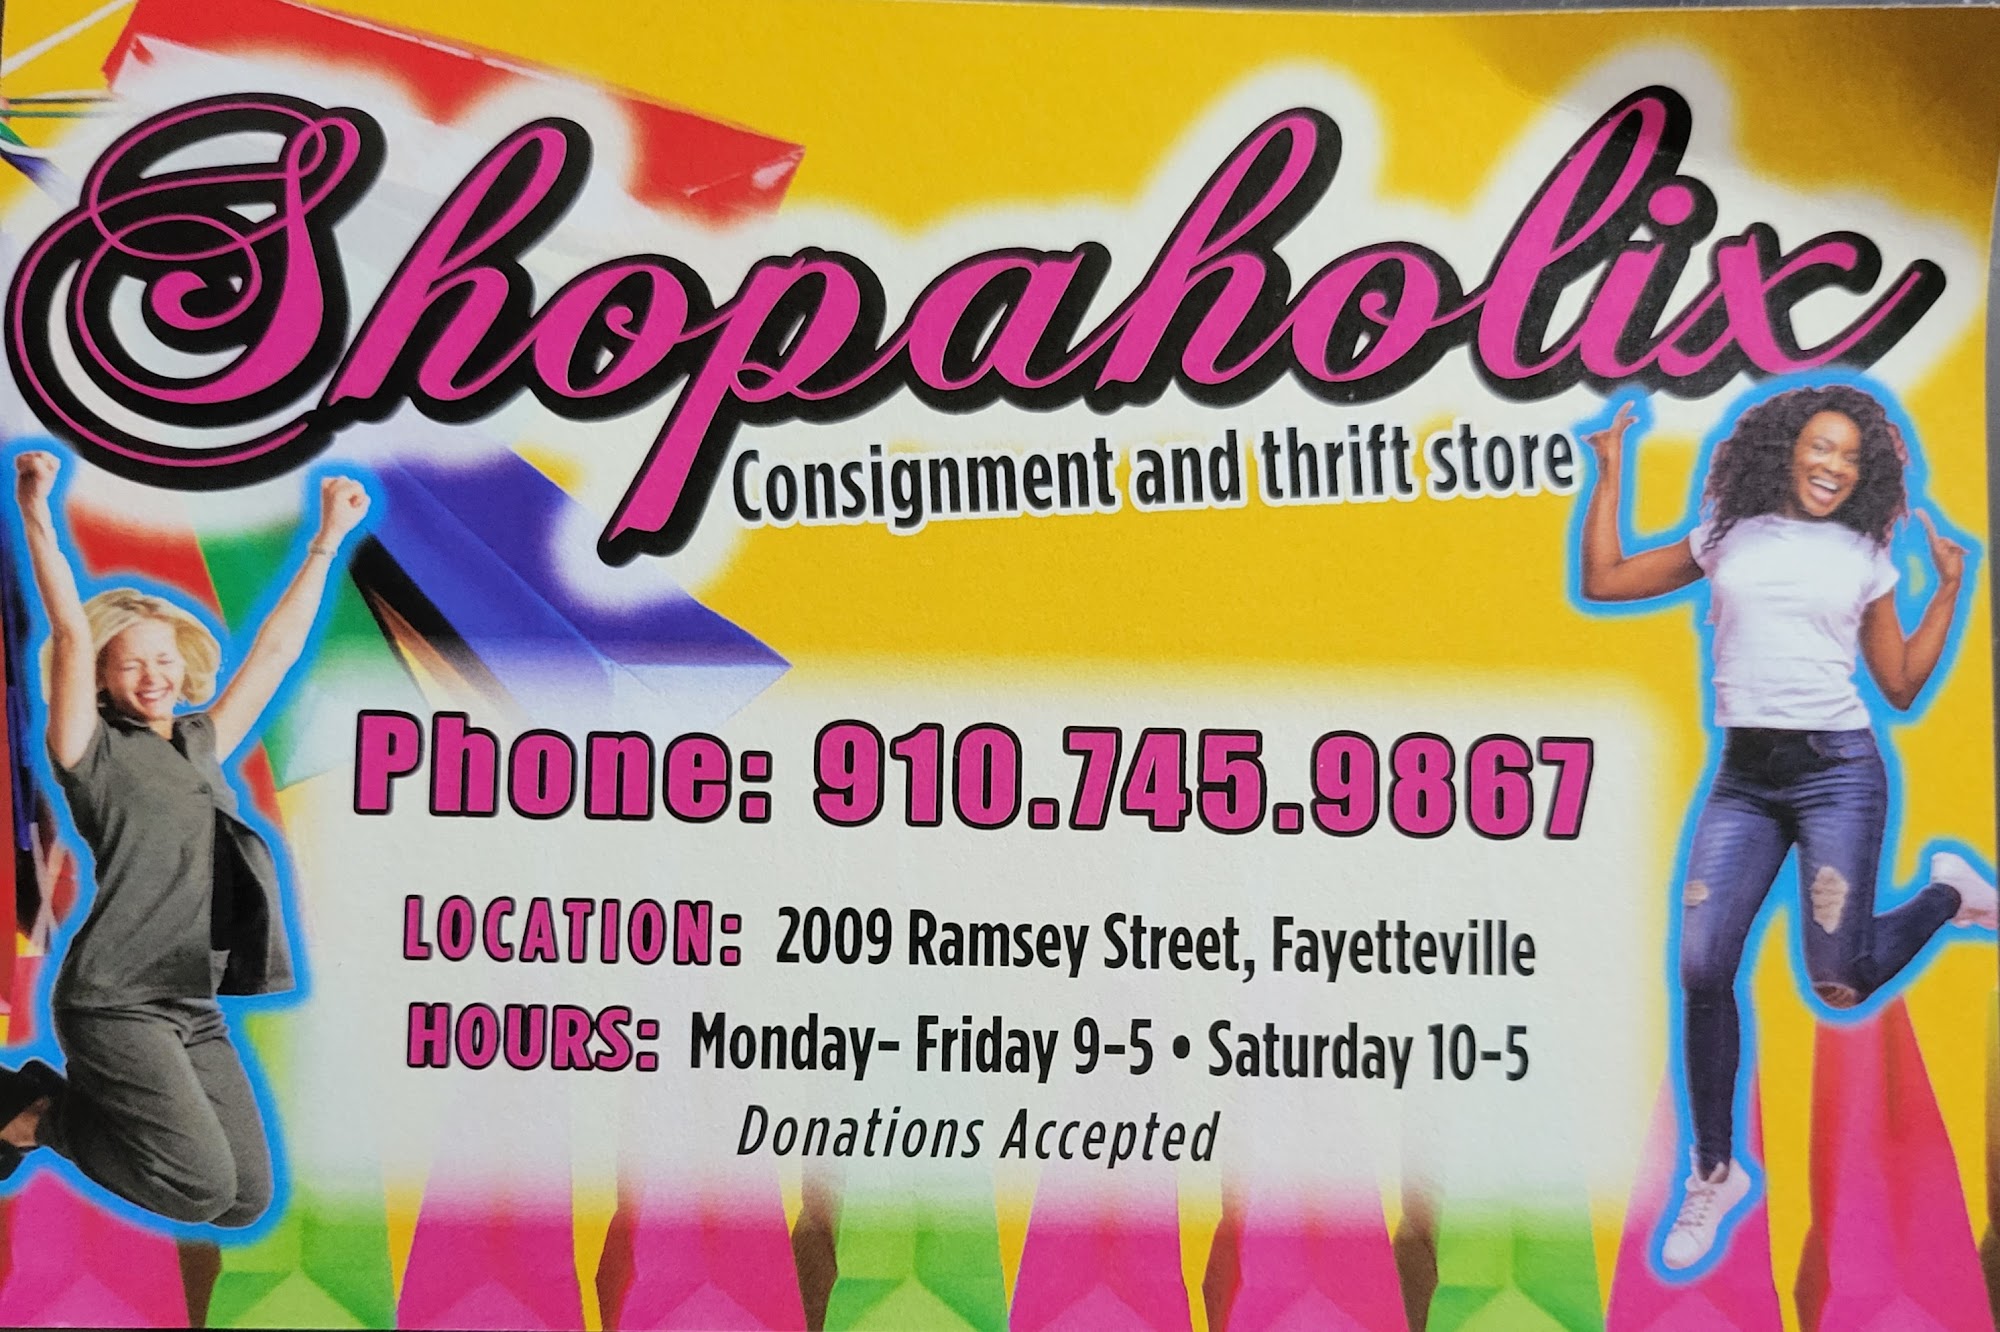 Shopaholix Consignment and Boutique